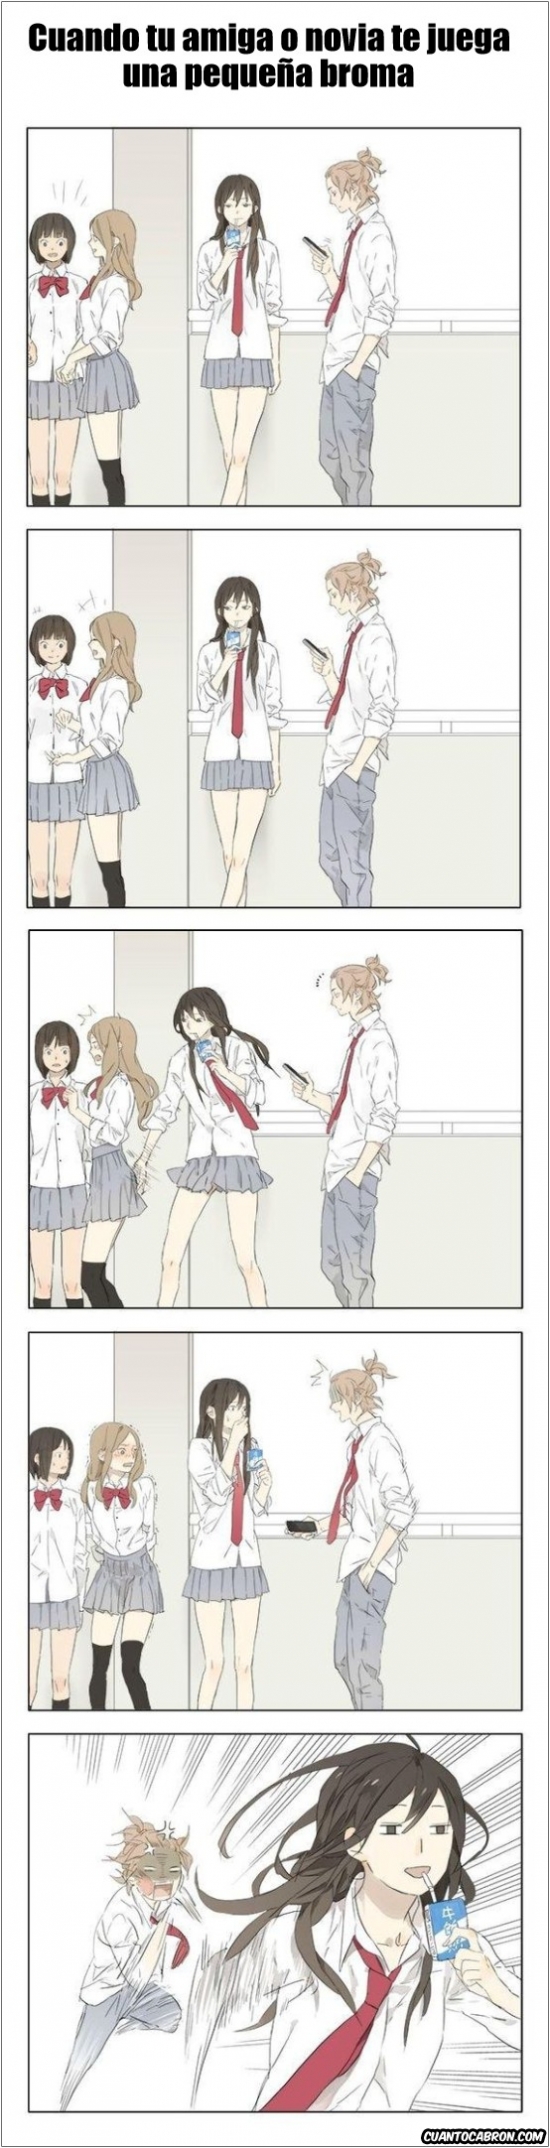 anime girl,anime troll,chico,escuela,manga